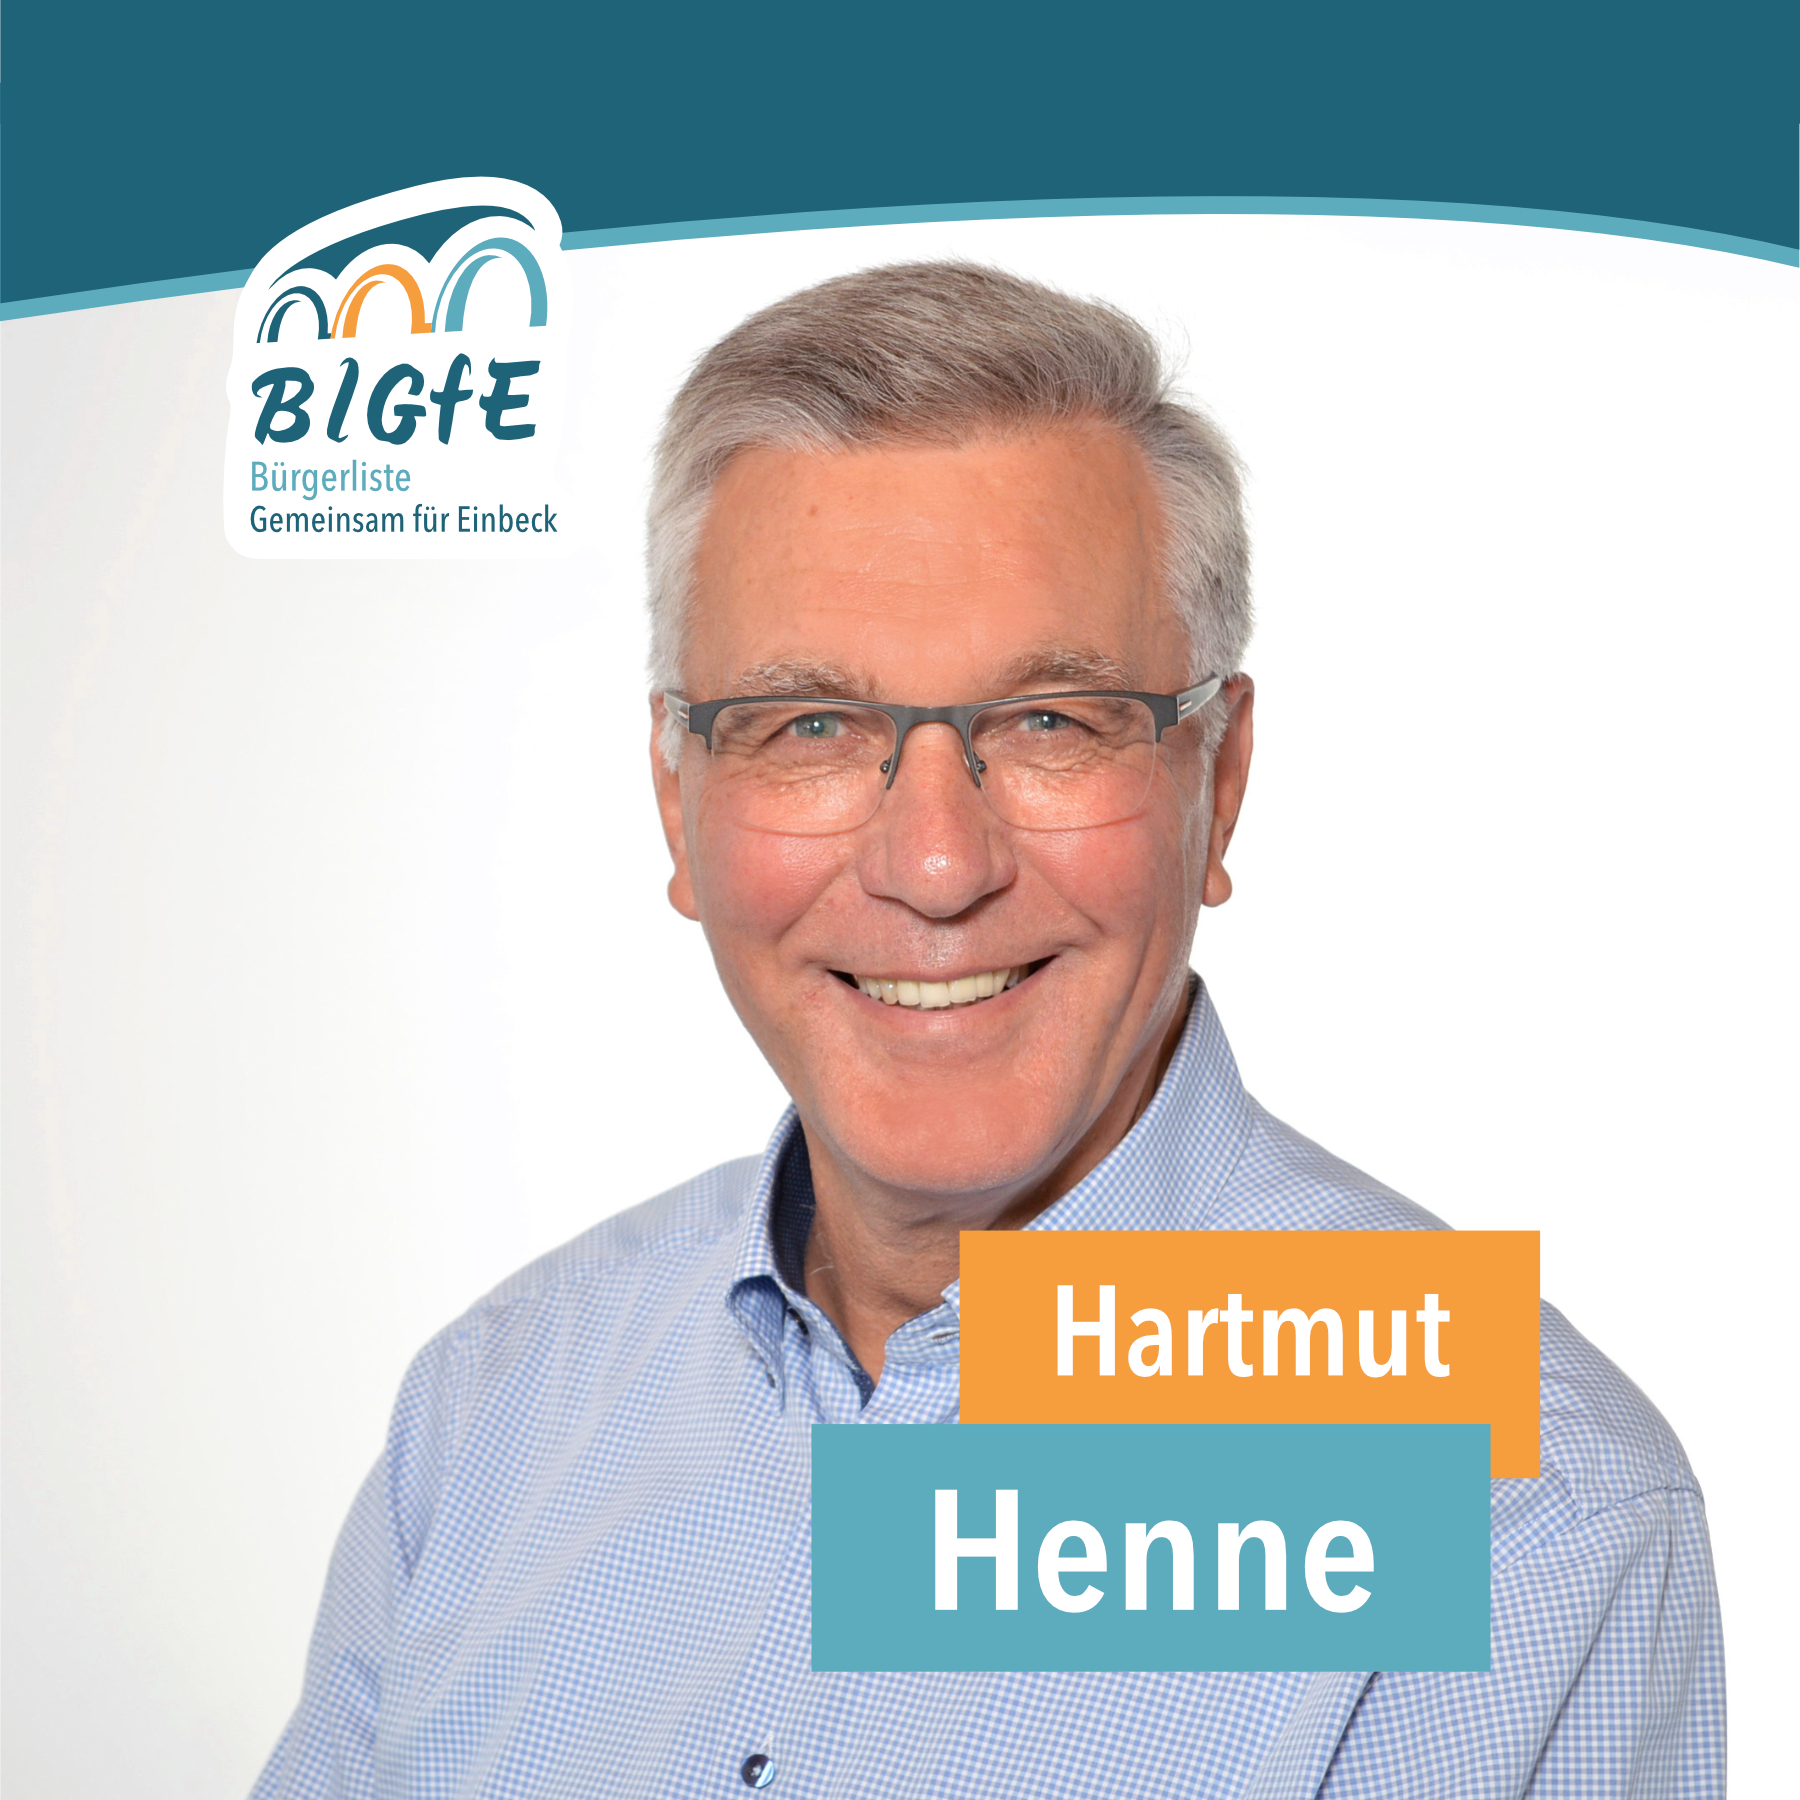 Hartmut Henne